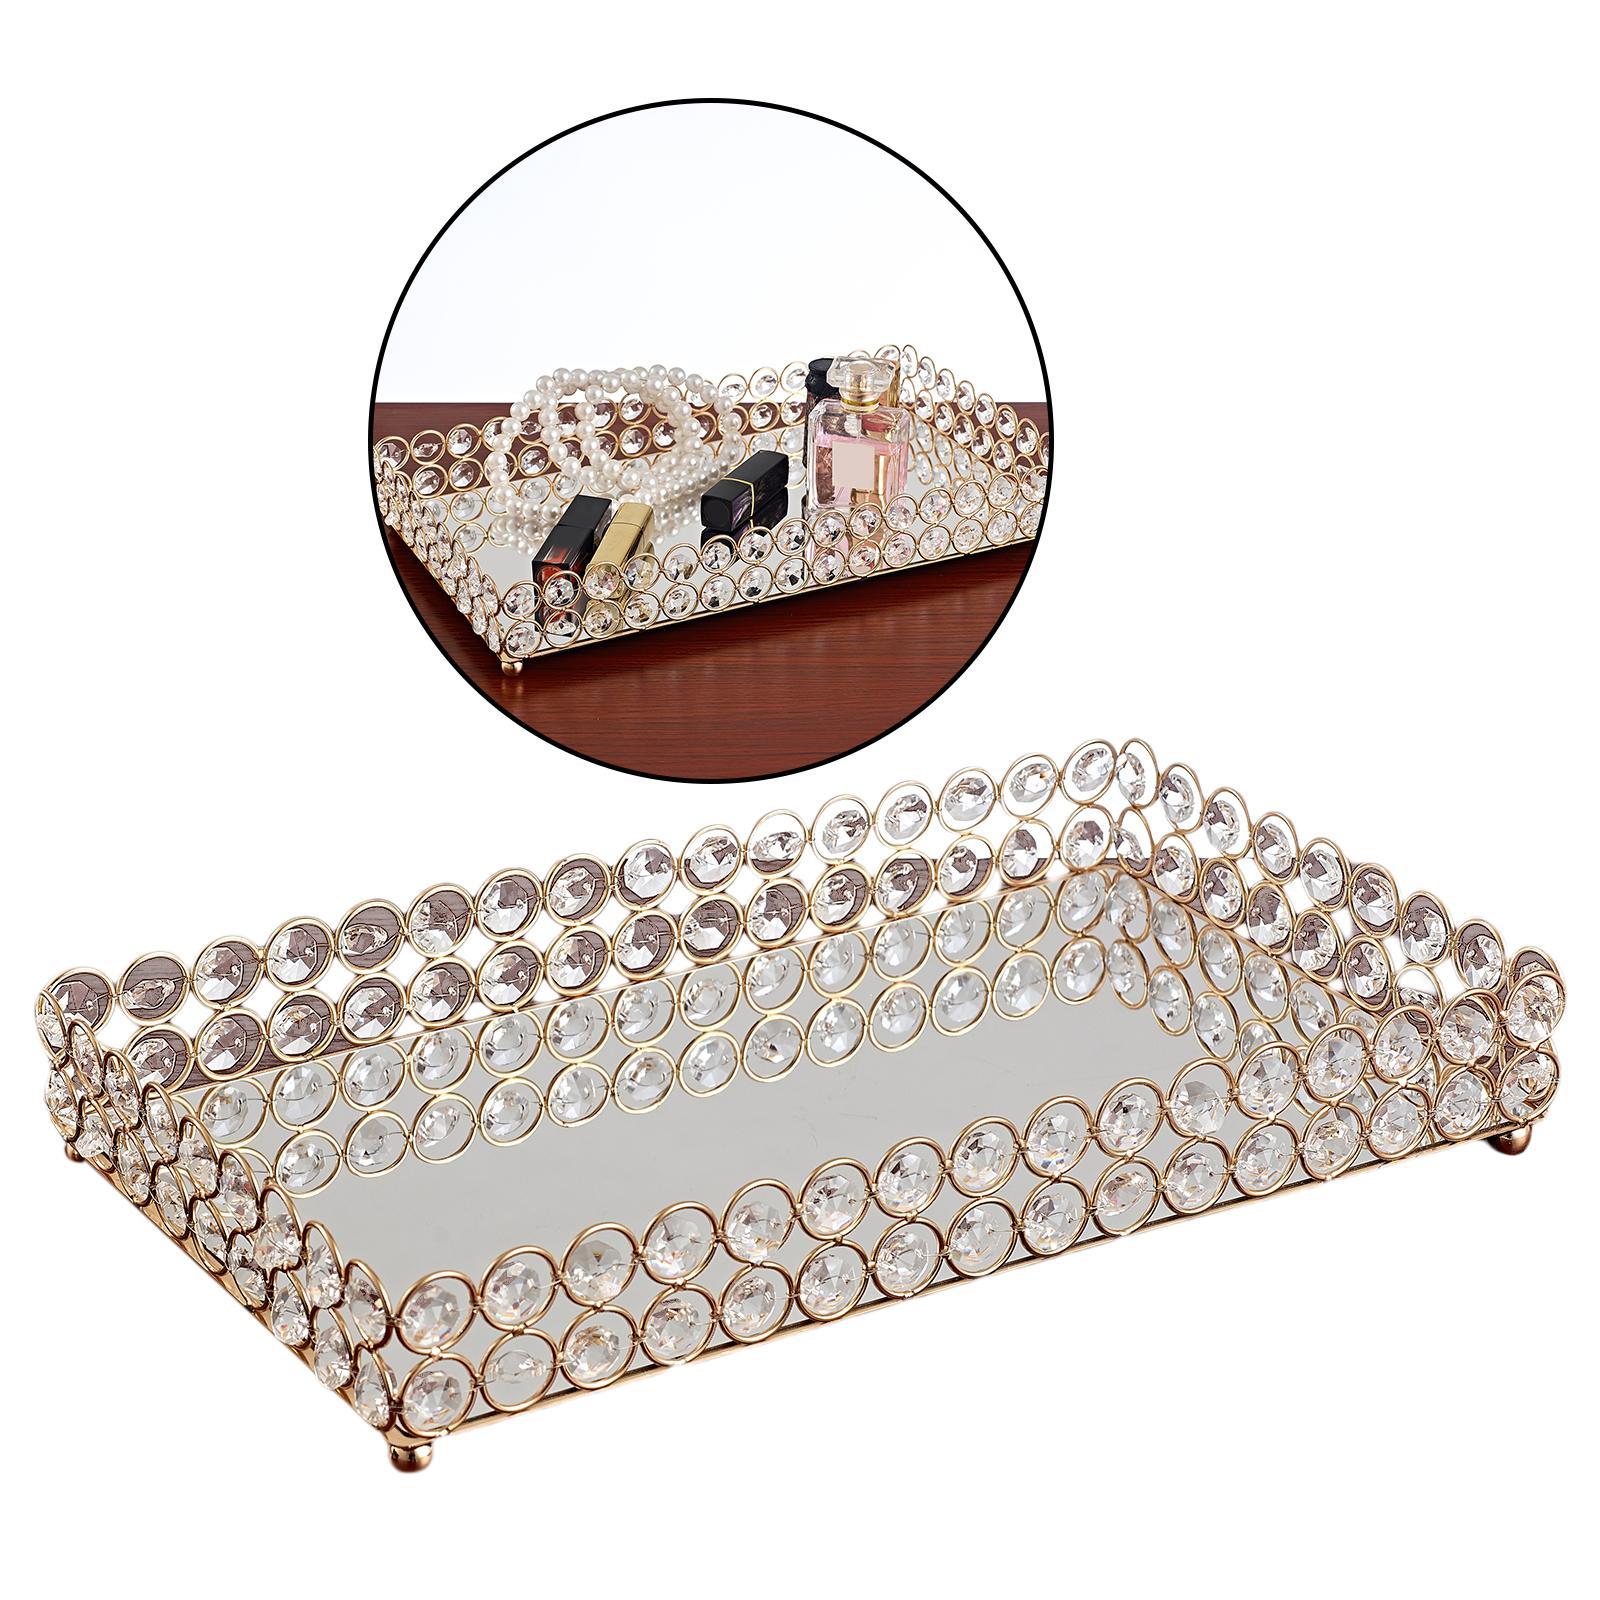 2x Mirrored Tray Home Decor Crystal Vanity Makeup Perfume Jewelry Tray